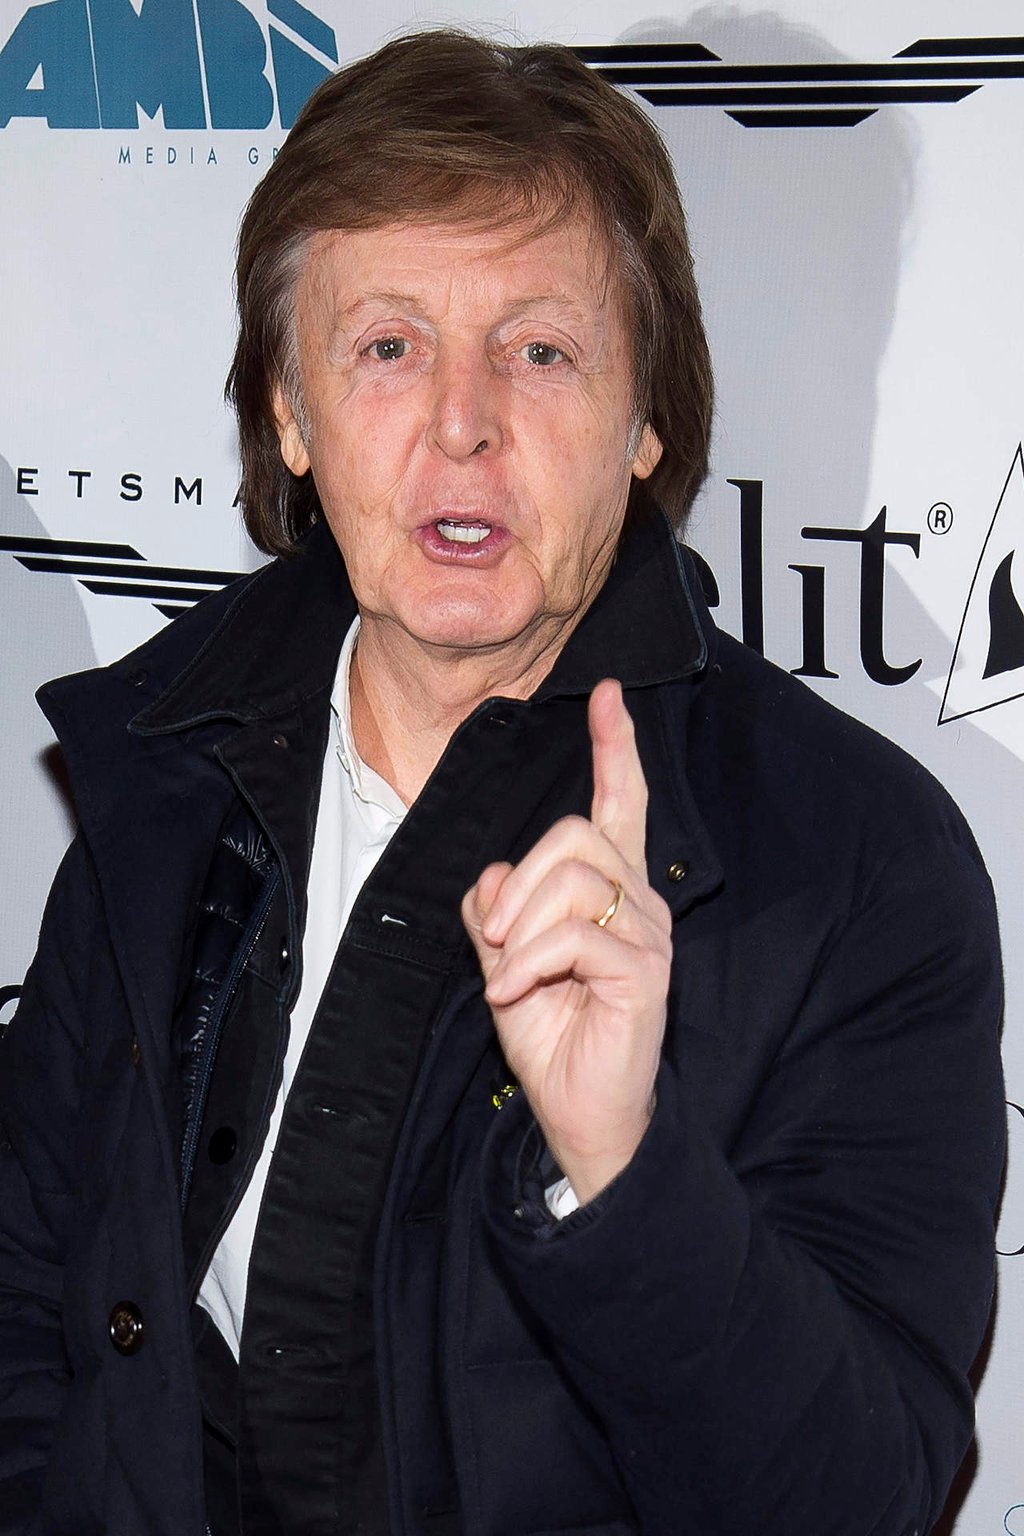 McCartney demanda a Sony/ATV por temas